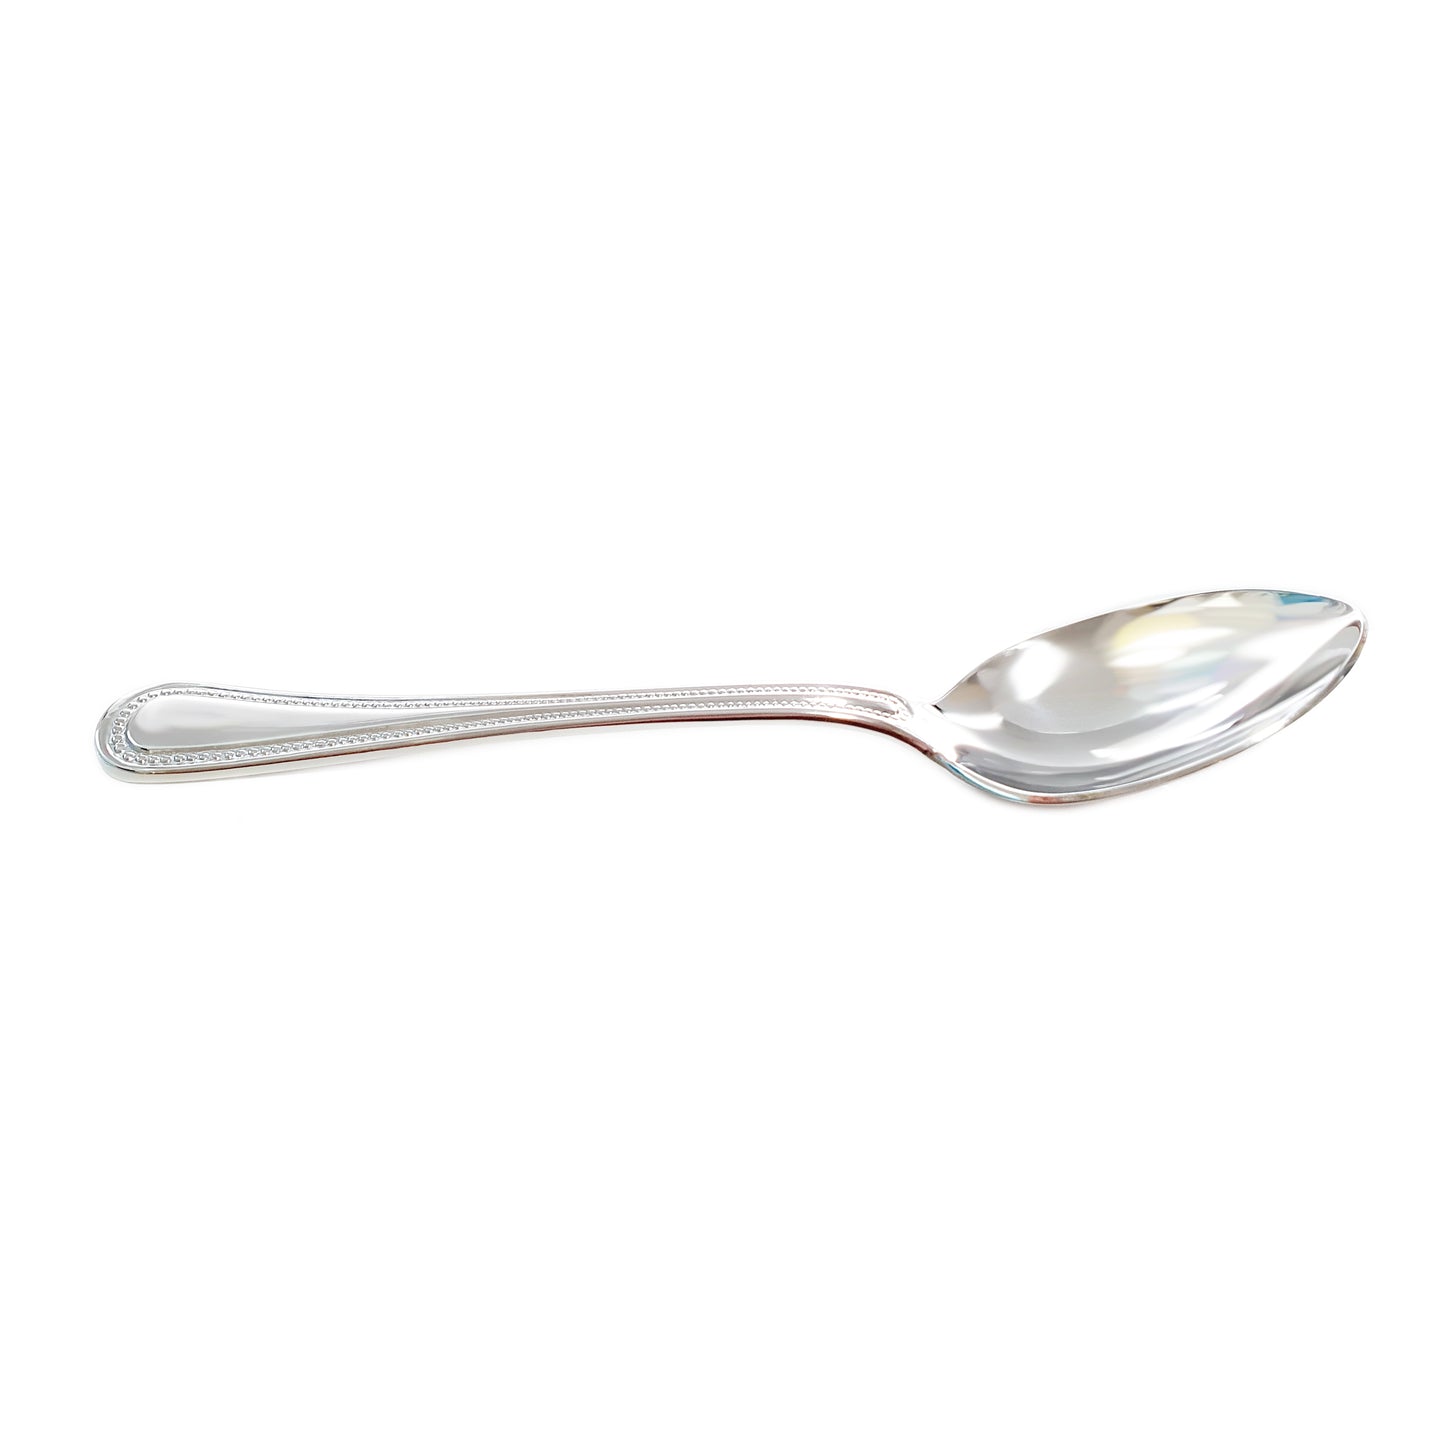 Grand Hotel Bead Dessert Spoon 175mm, 4P Set 𝟑𝟎% 𝐎𝐅𝐅